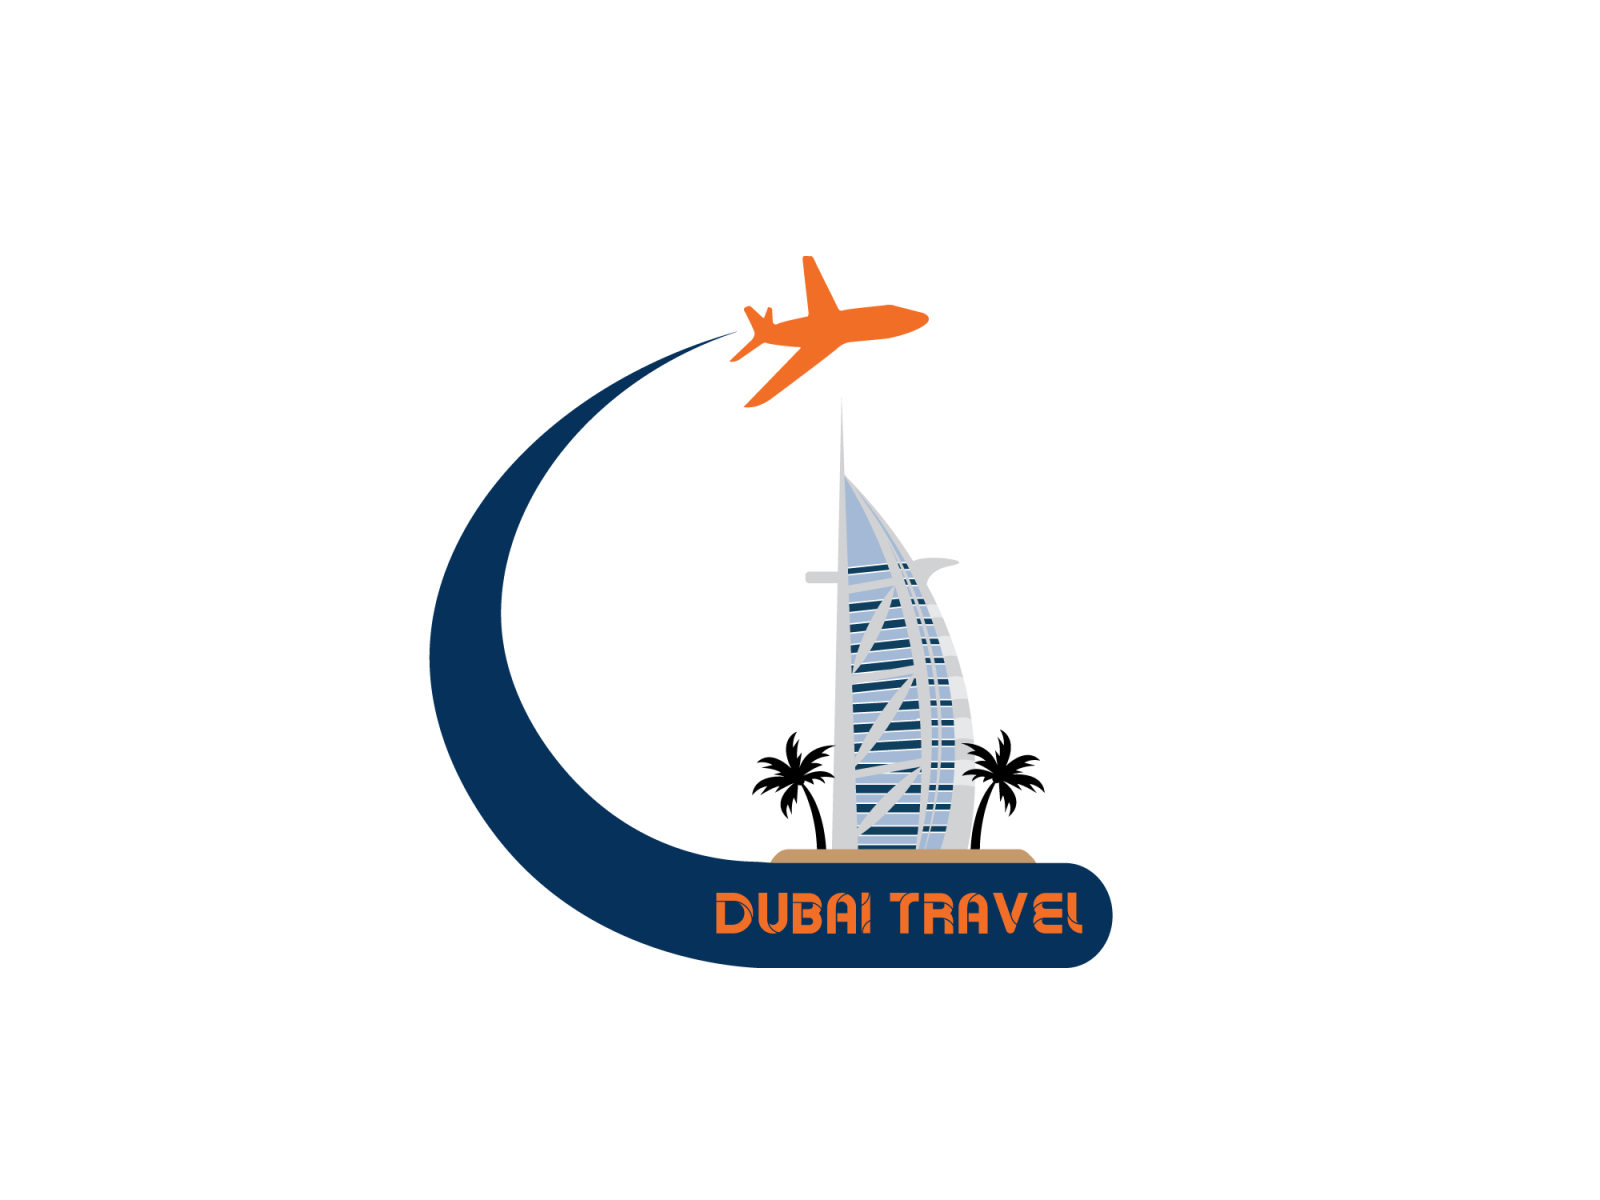 Logo Design Dubai Travel Company By Daniela Radutoiu On Dribbble